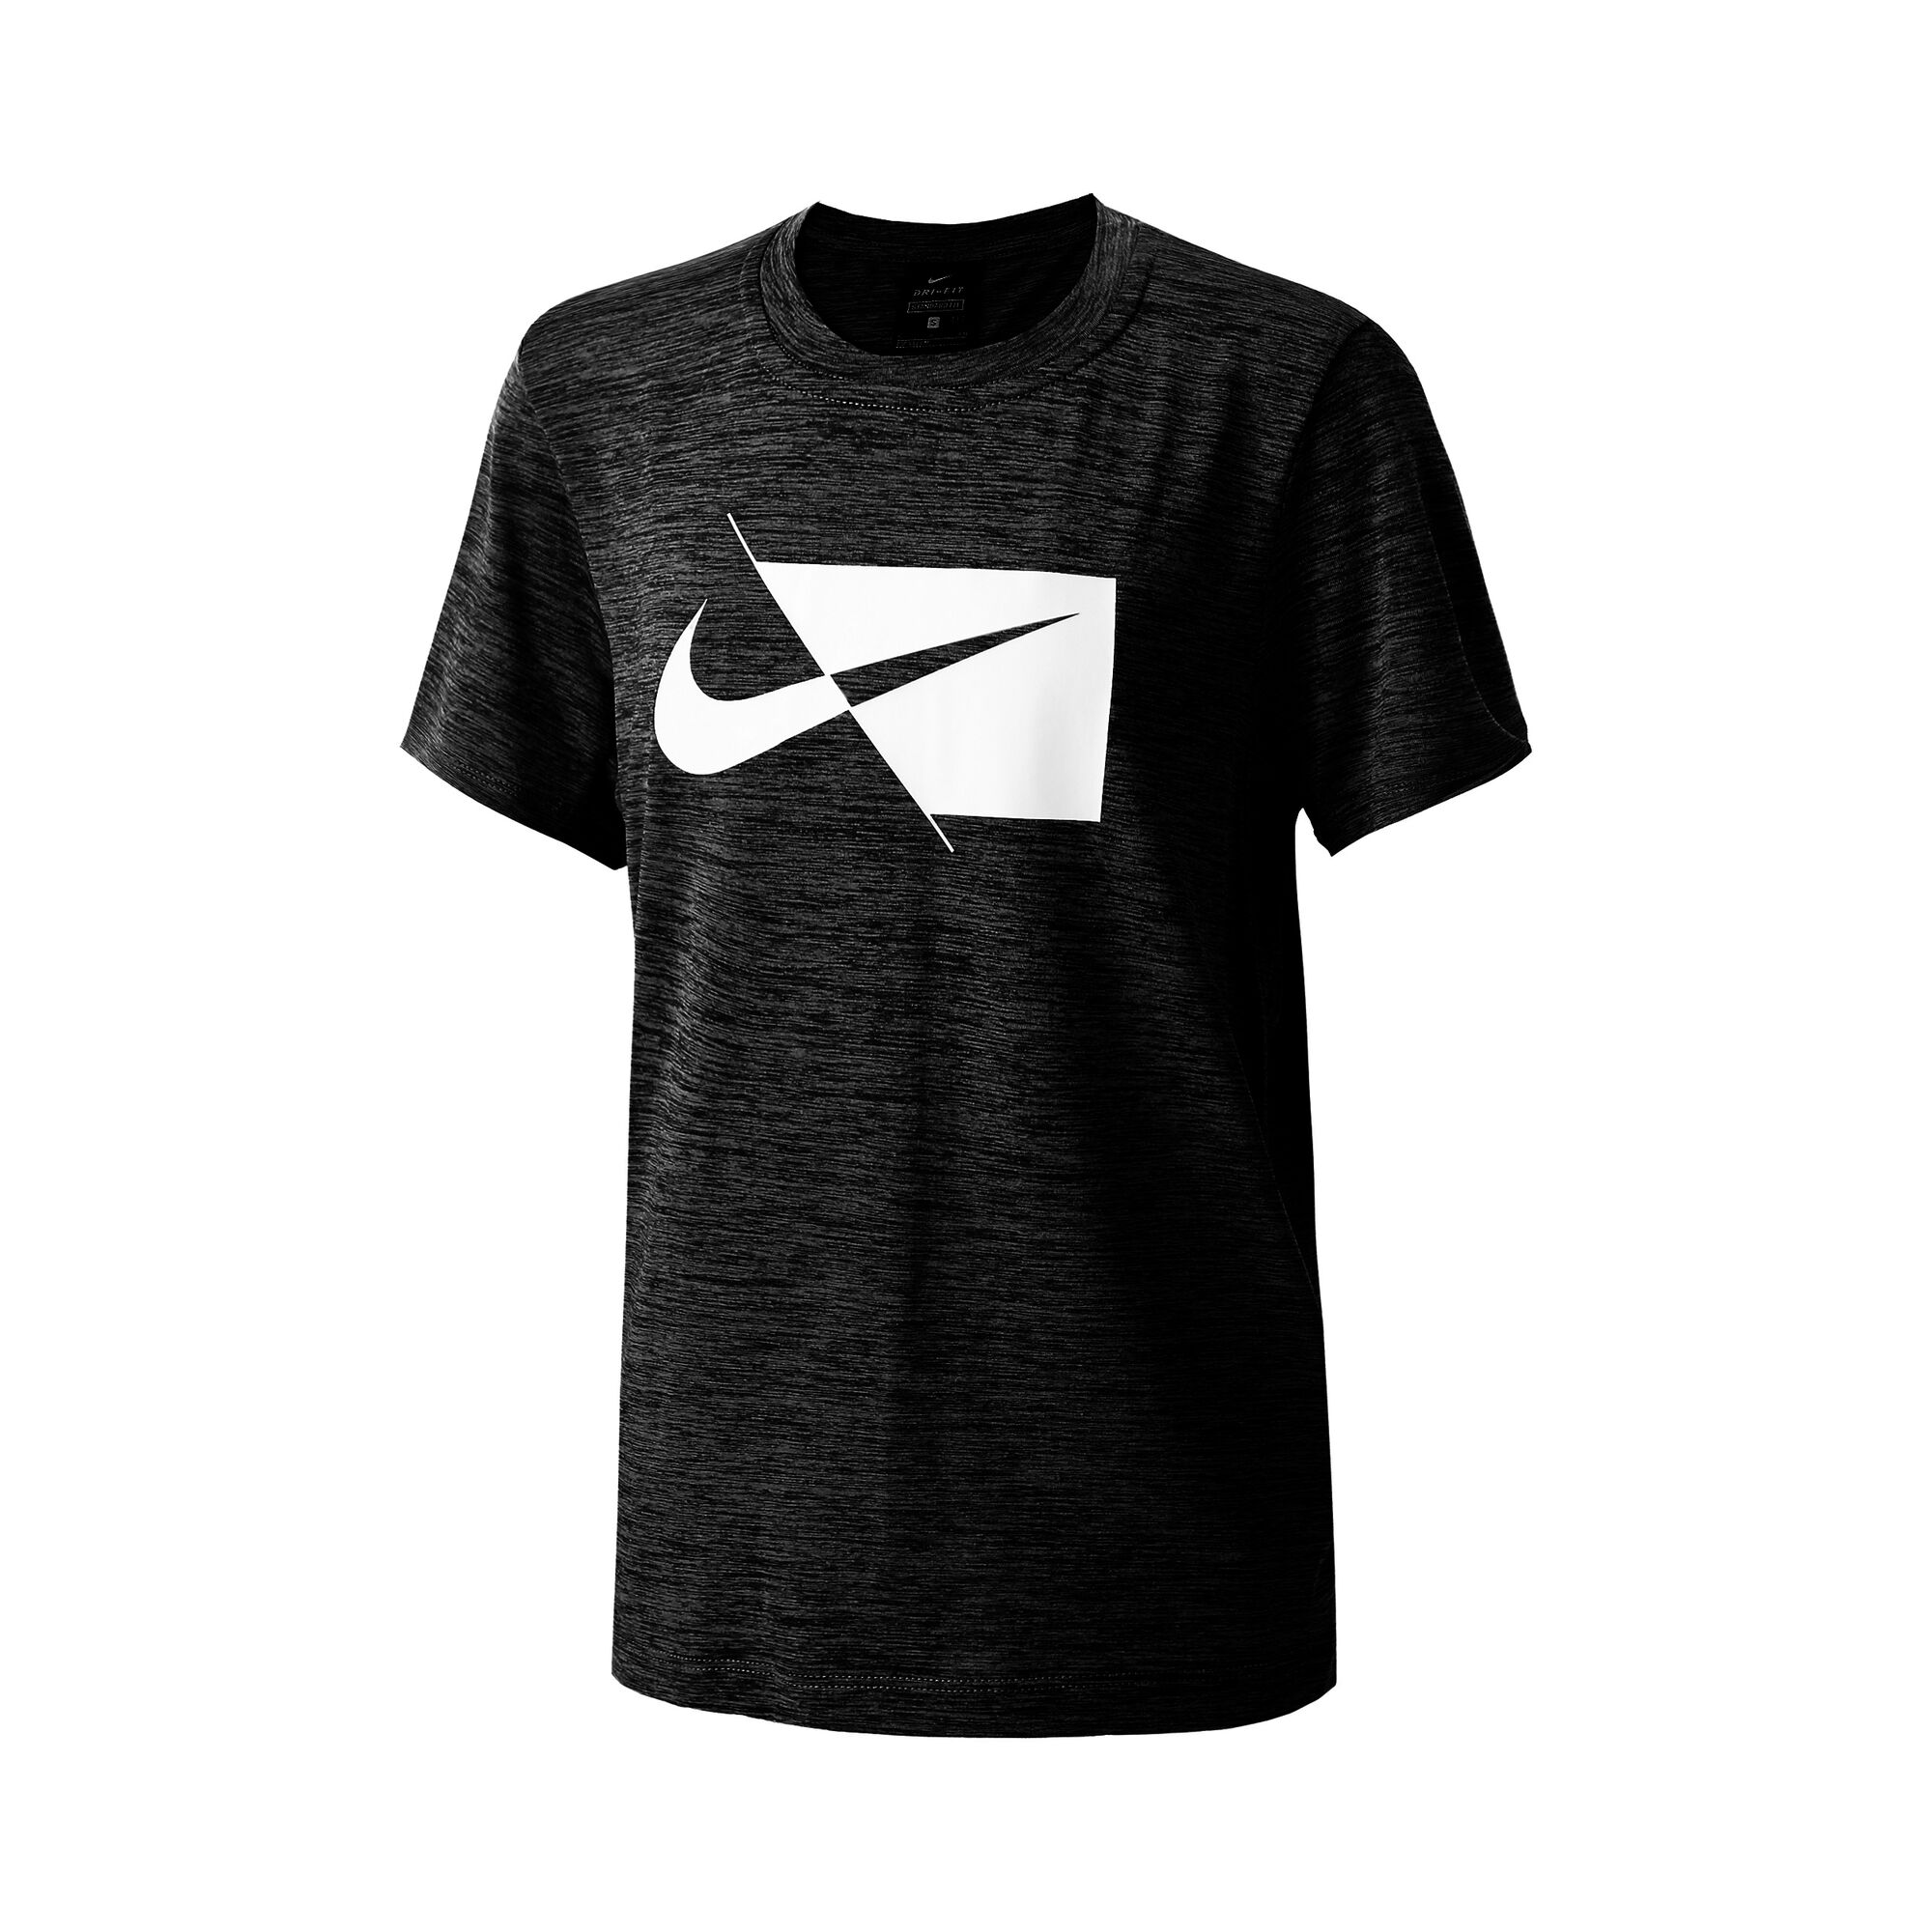 buy Nike Core T-Shirt Boys - Black, White online | Tennis-Point